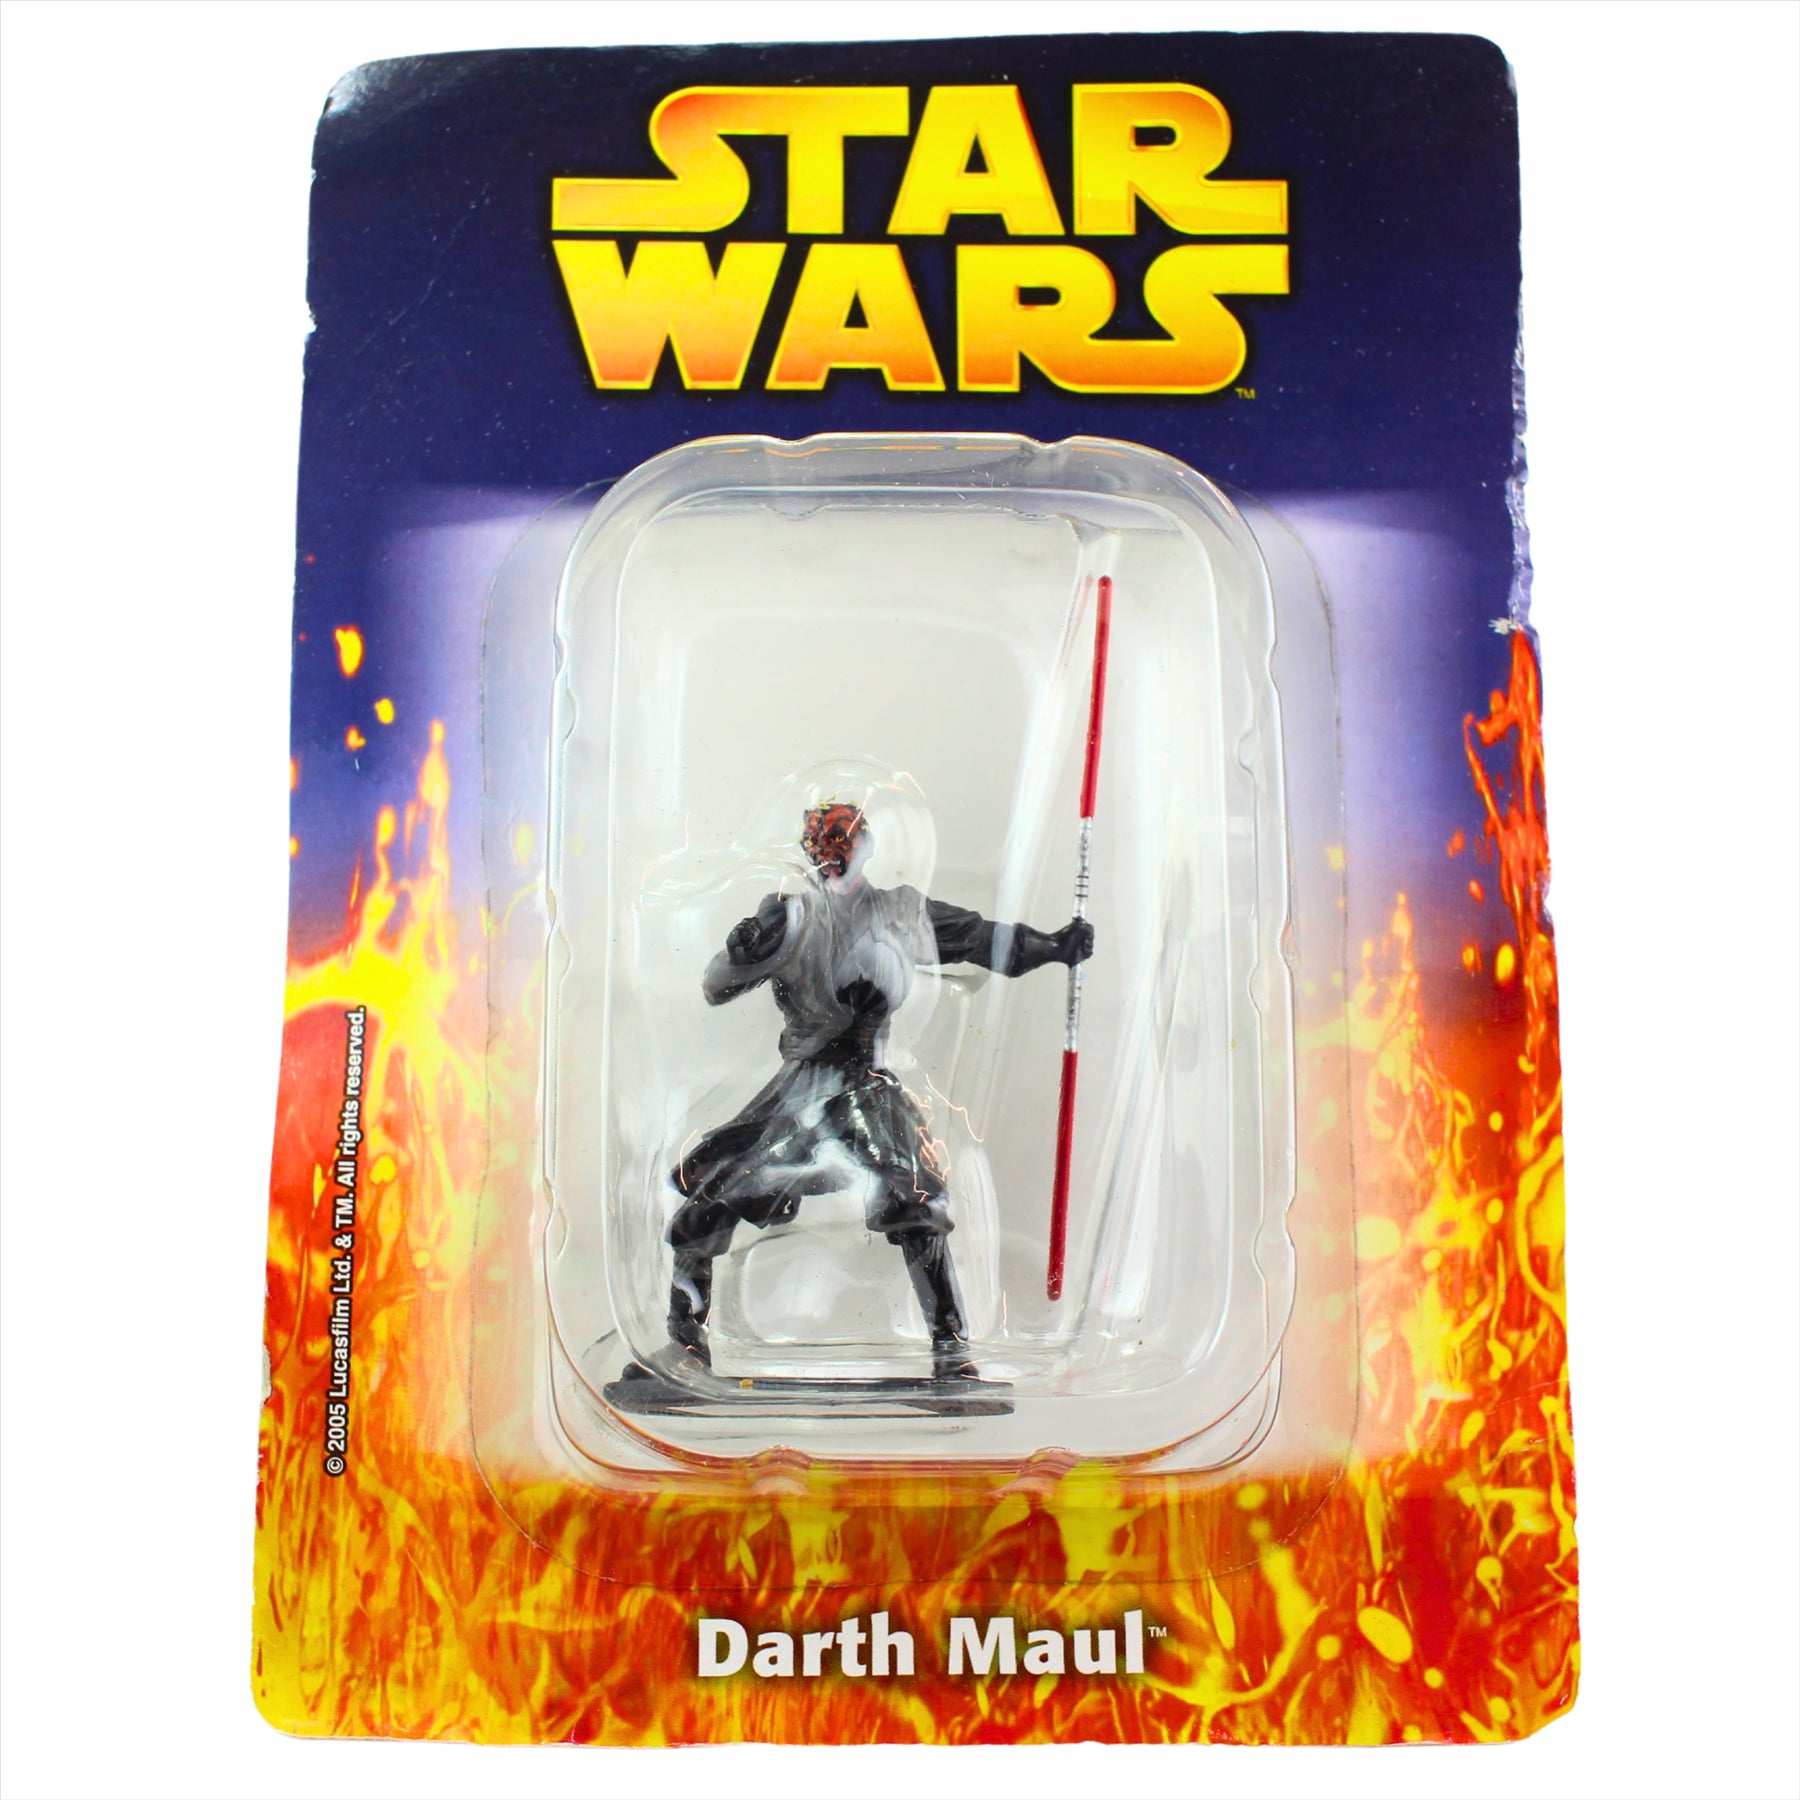 Star Wars Anakin Skywalker, Darth Vader, and Darth Maul DeAgostini Vintage 6-8cm Diecast Figures - Pack of 3 - Toptoys2u